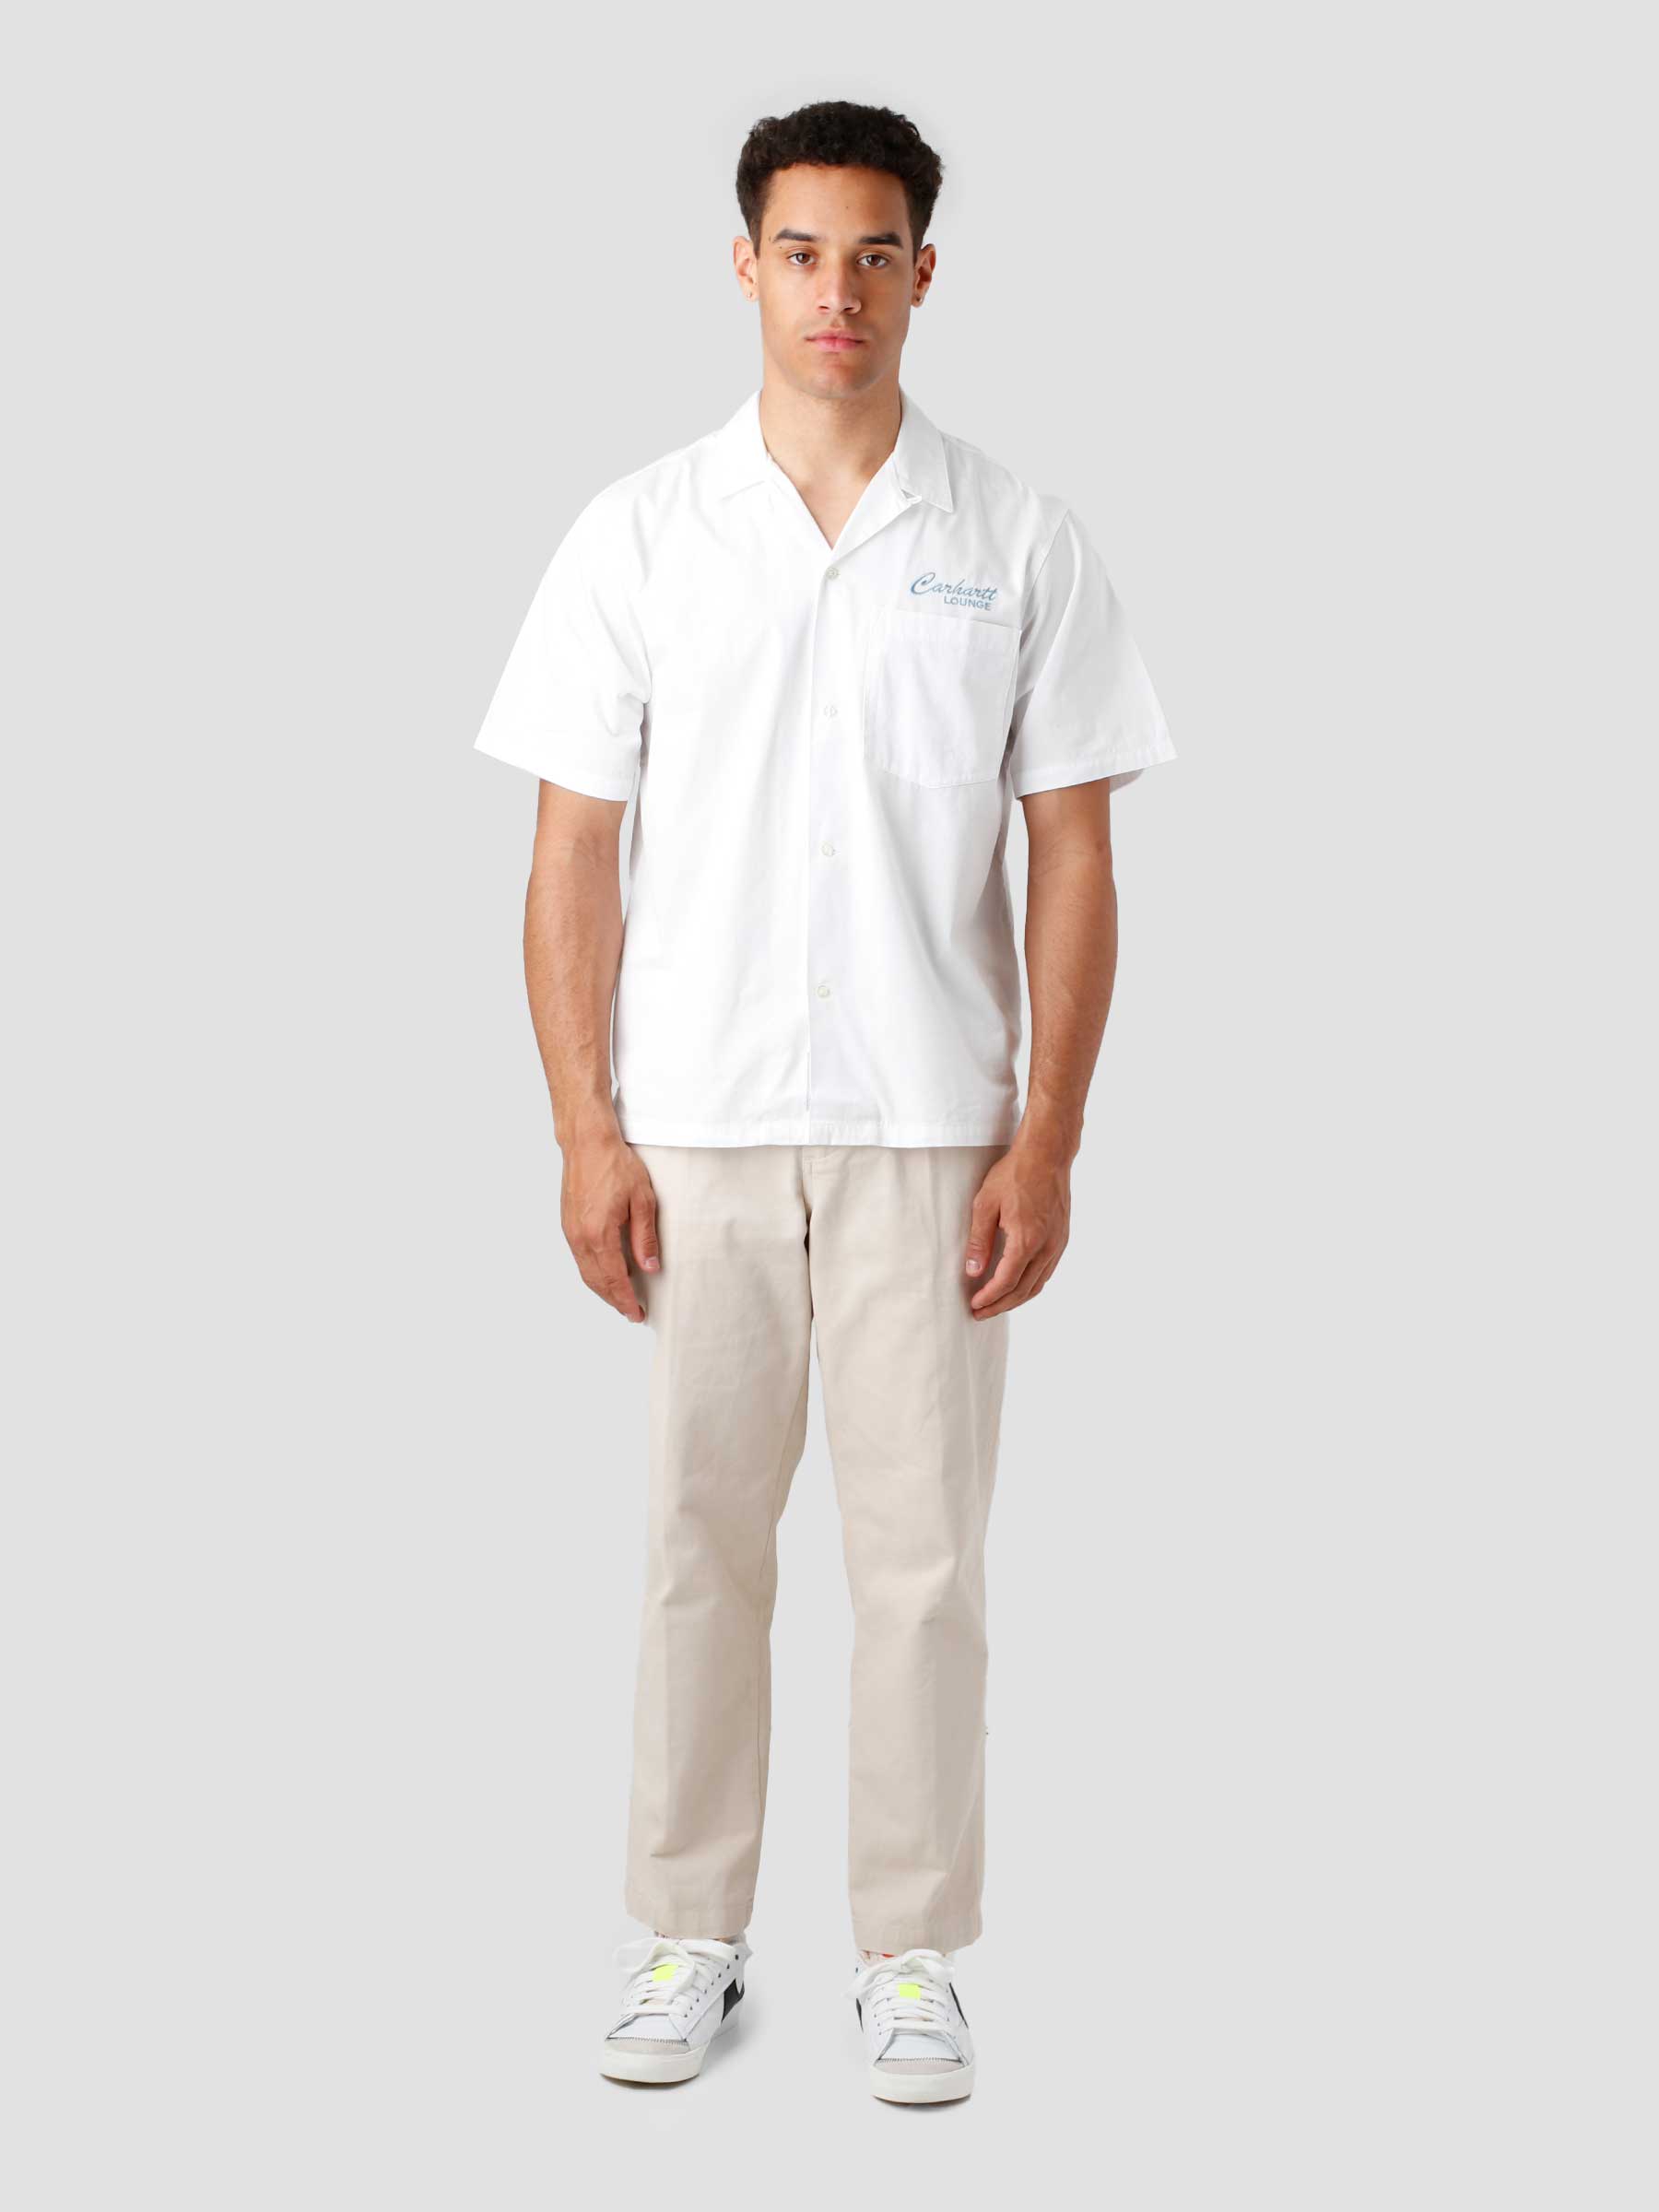 S/S Carhartt Lounge Shirt White I030046-02XX